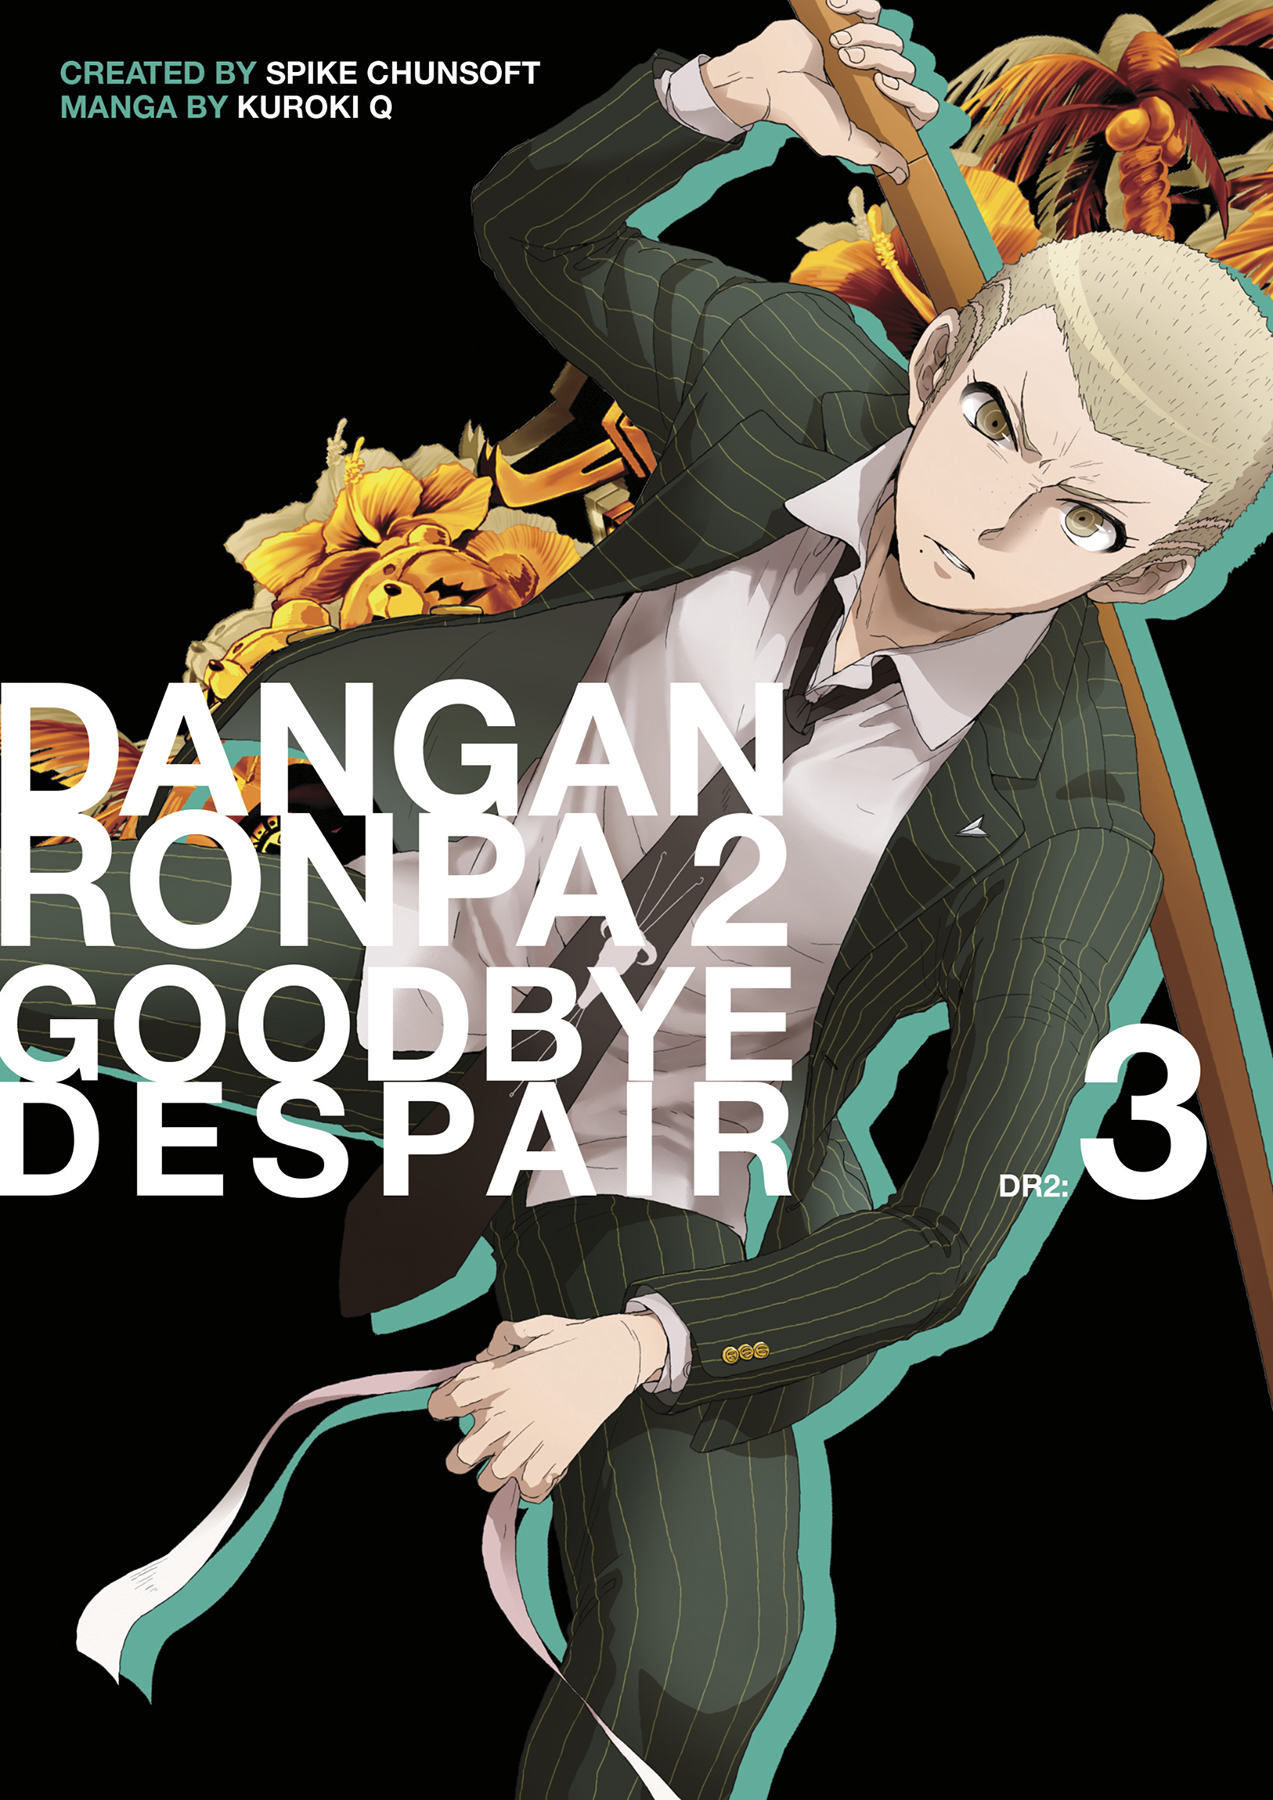 Danganronpa 2 Goodbye Despair Manga Volume 3